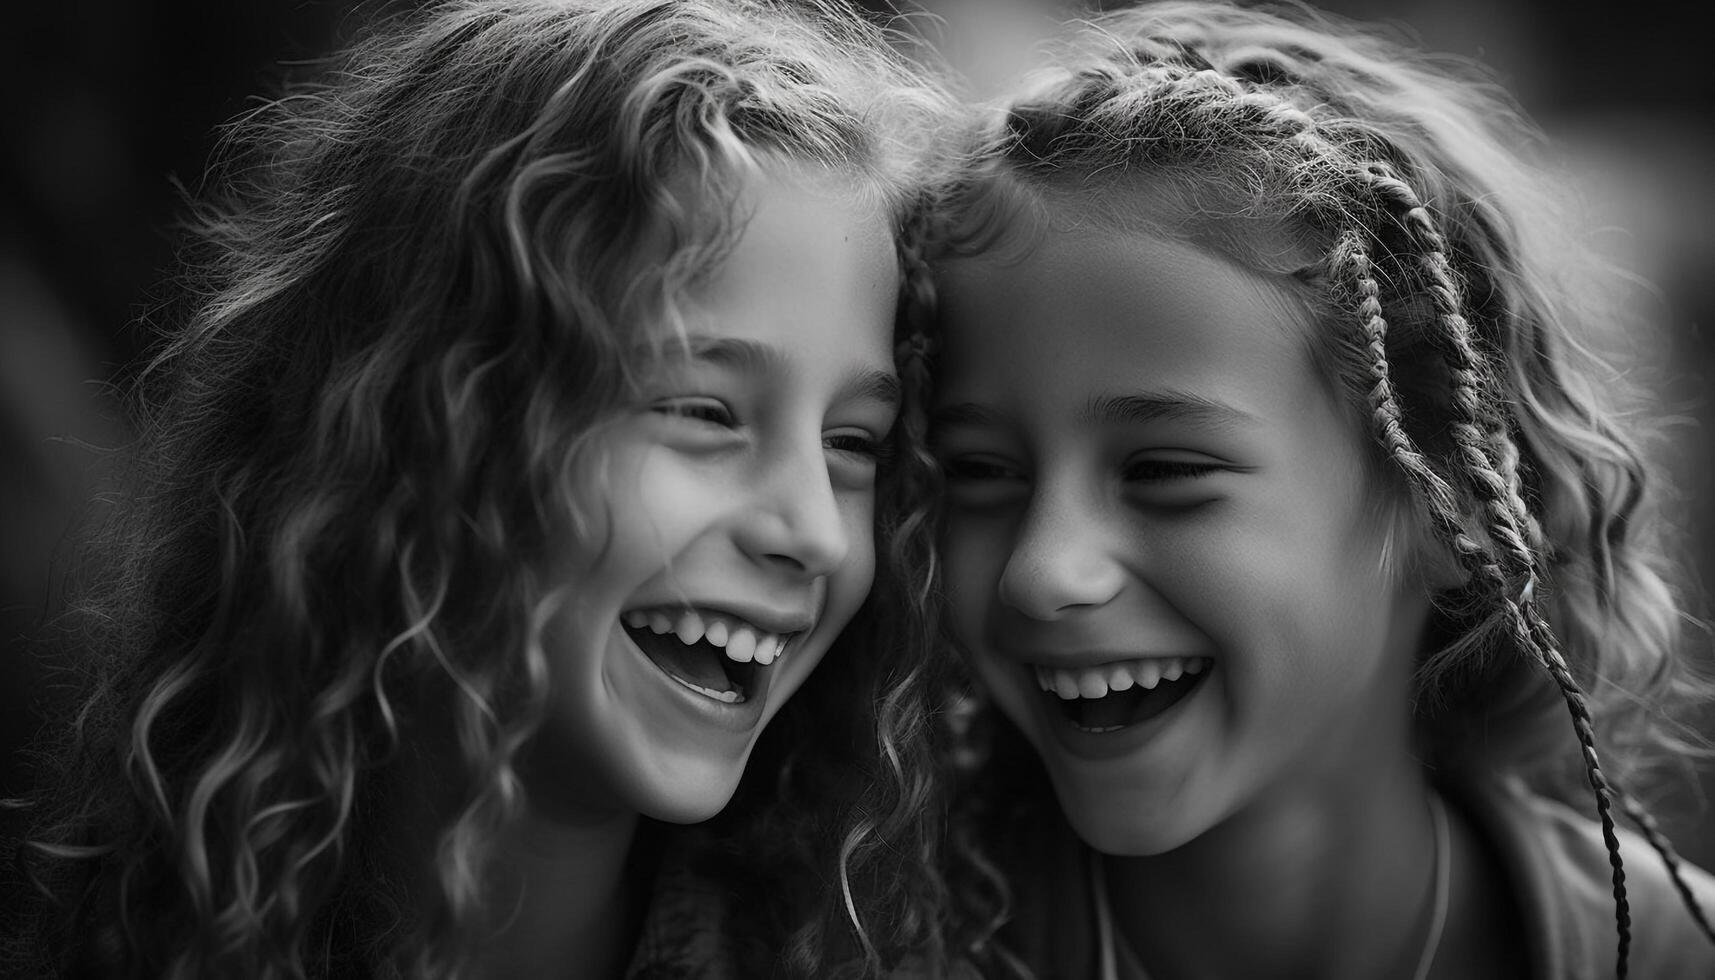 Cute sisters embrace in joyful summer portrait generated by AI photo